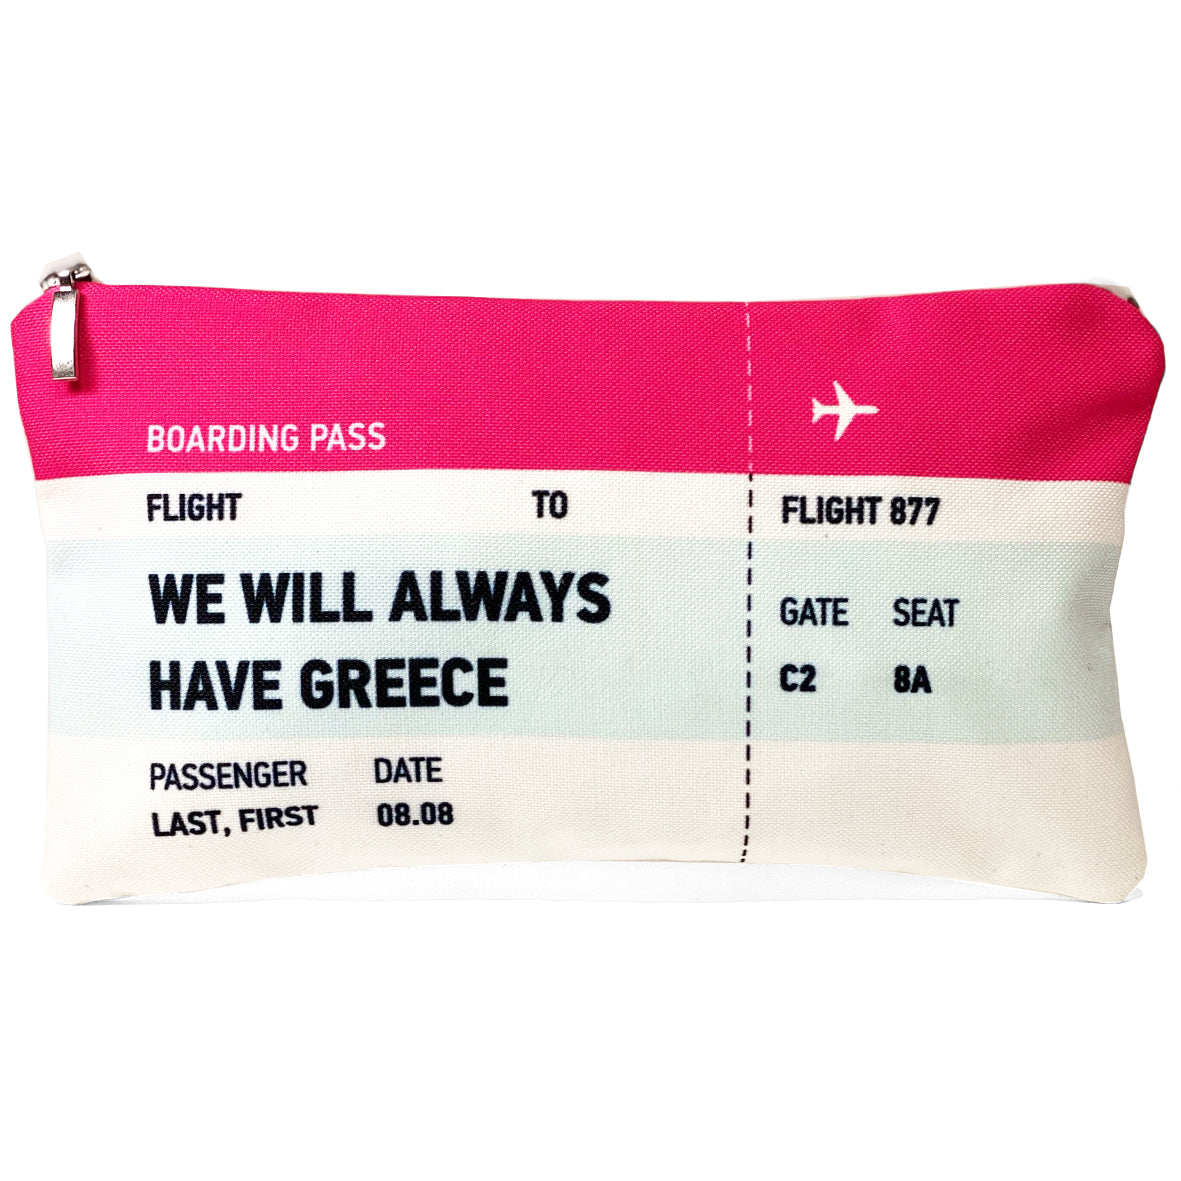 We will always have Greece ticket bag